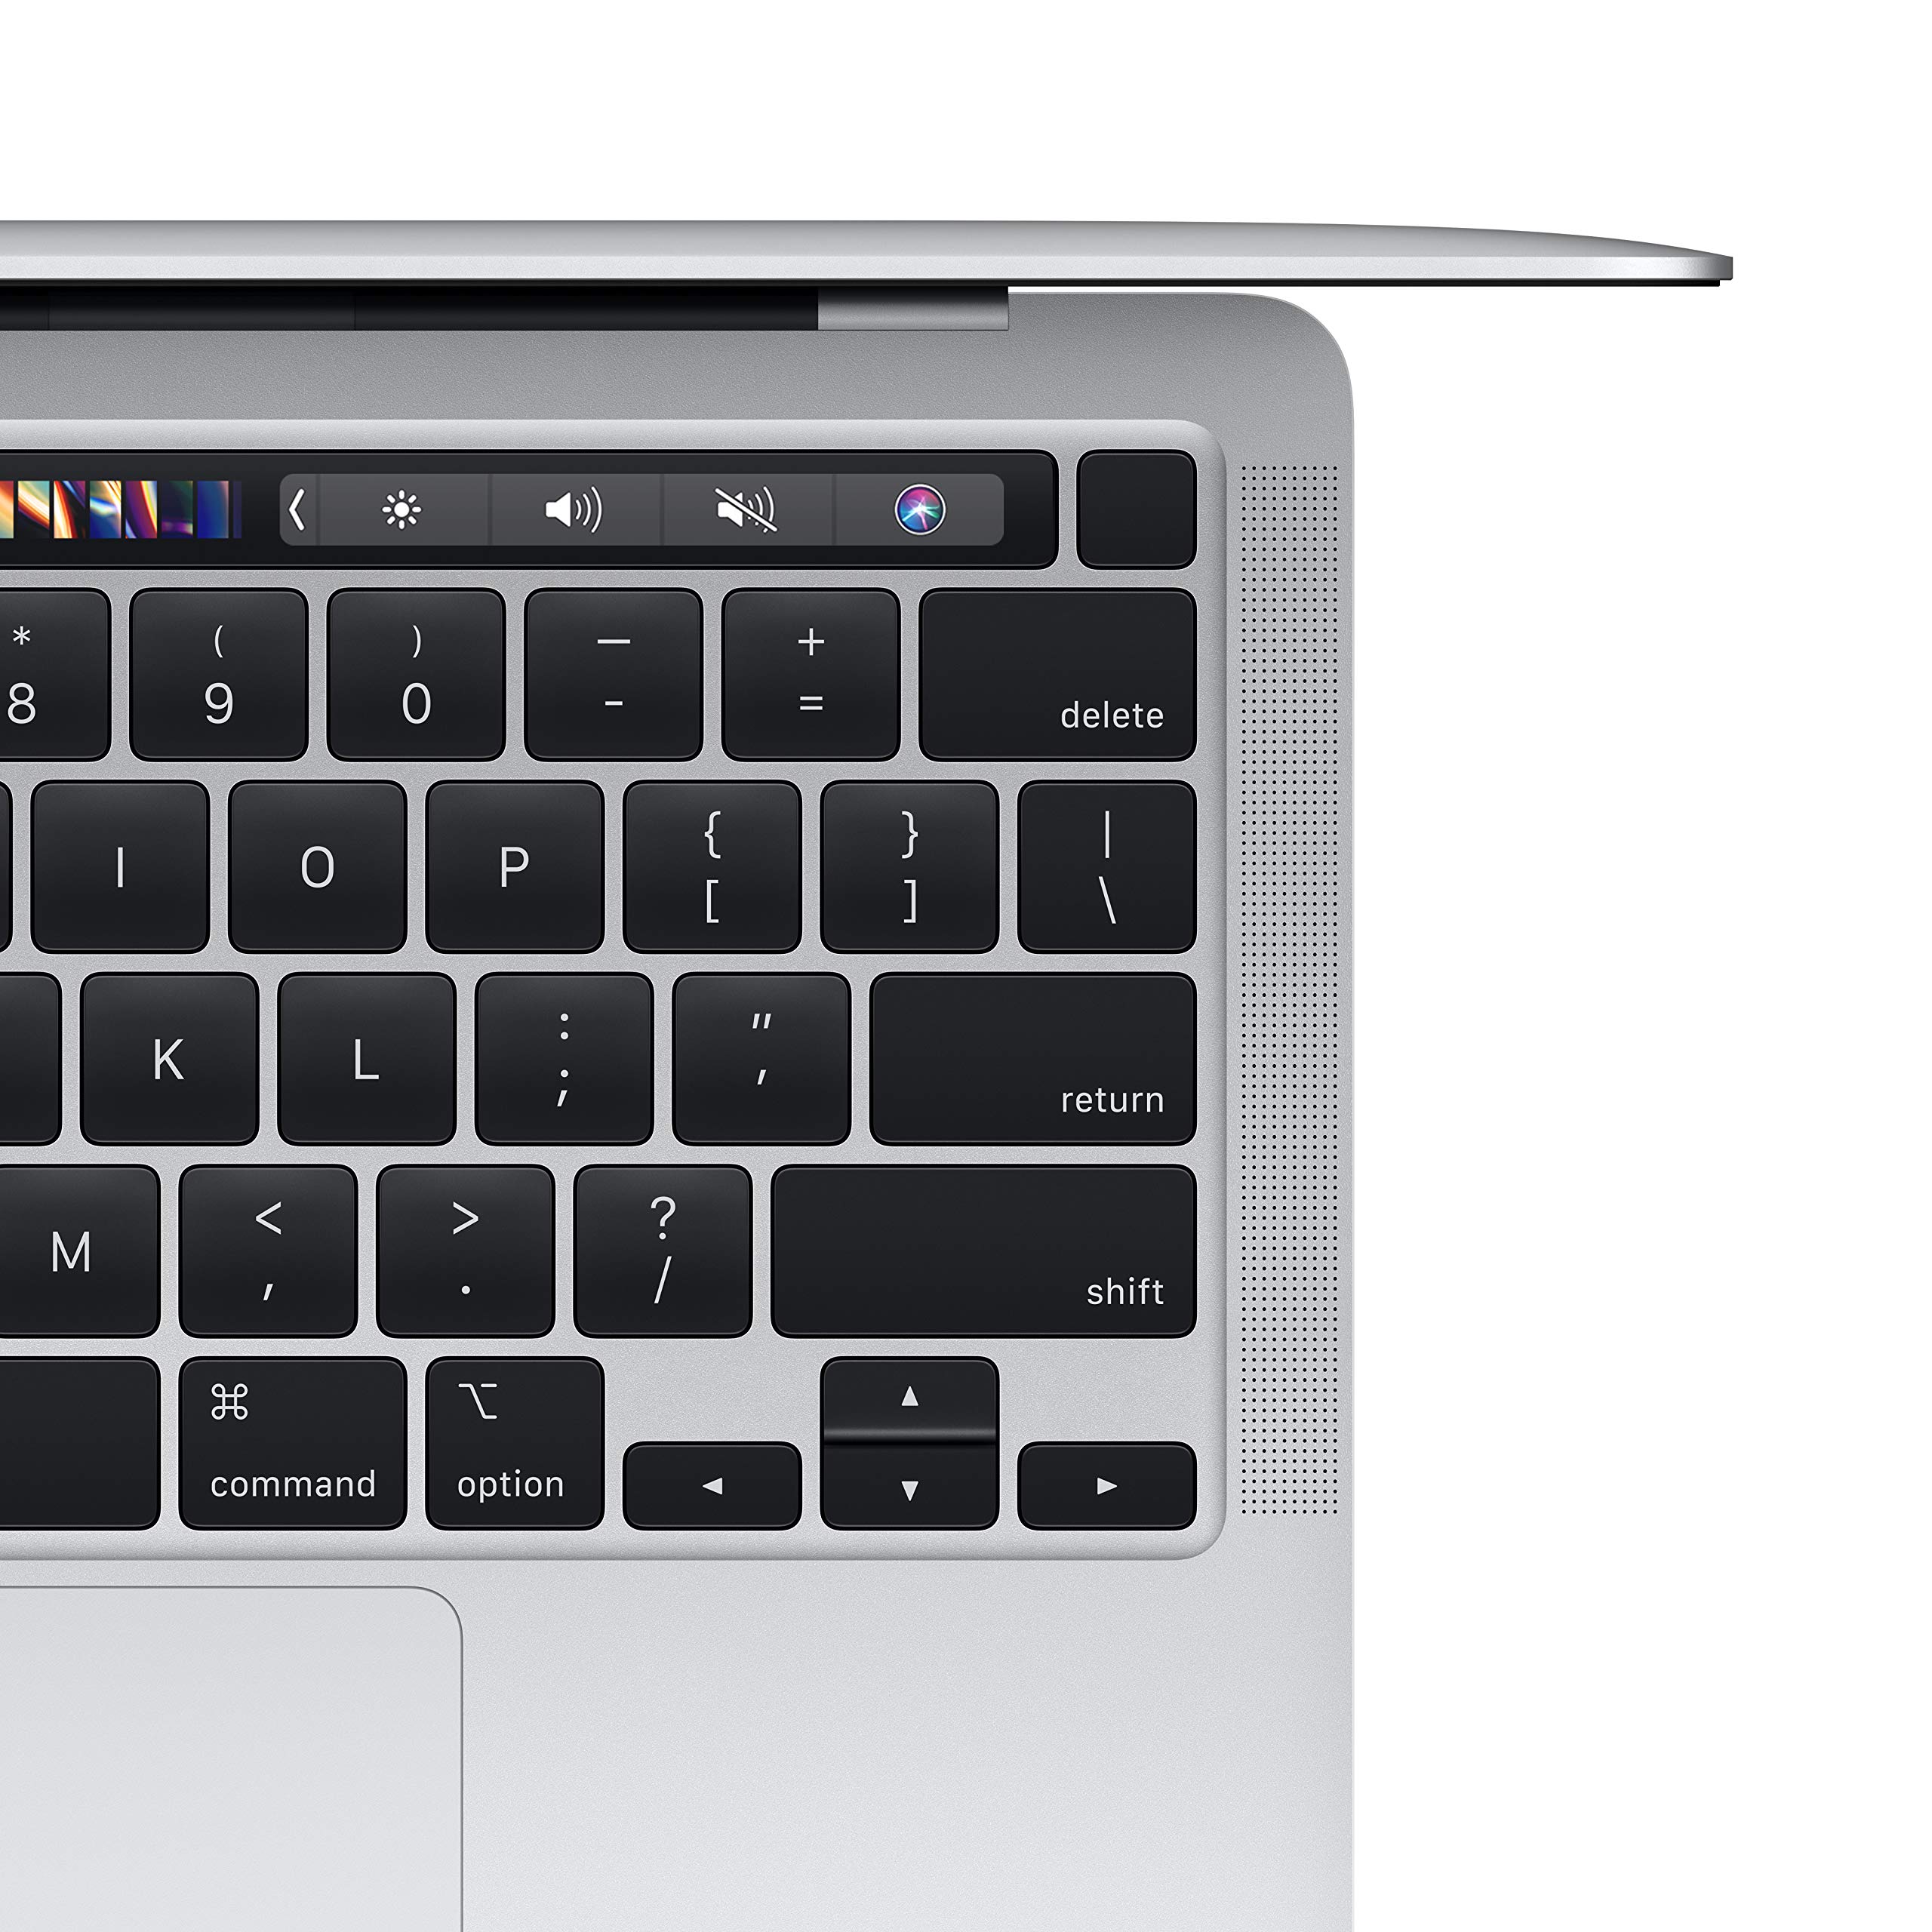 Apple 2020 MacBook Pro M1 Chip (13-inch, 8GB RAM, 256GB SSD Storage) - Silver